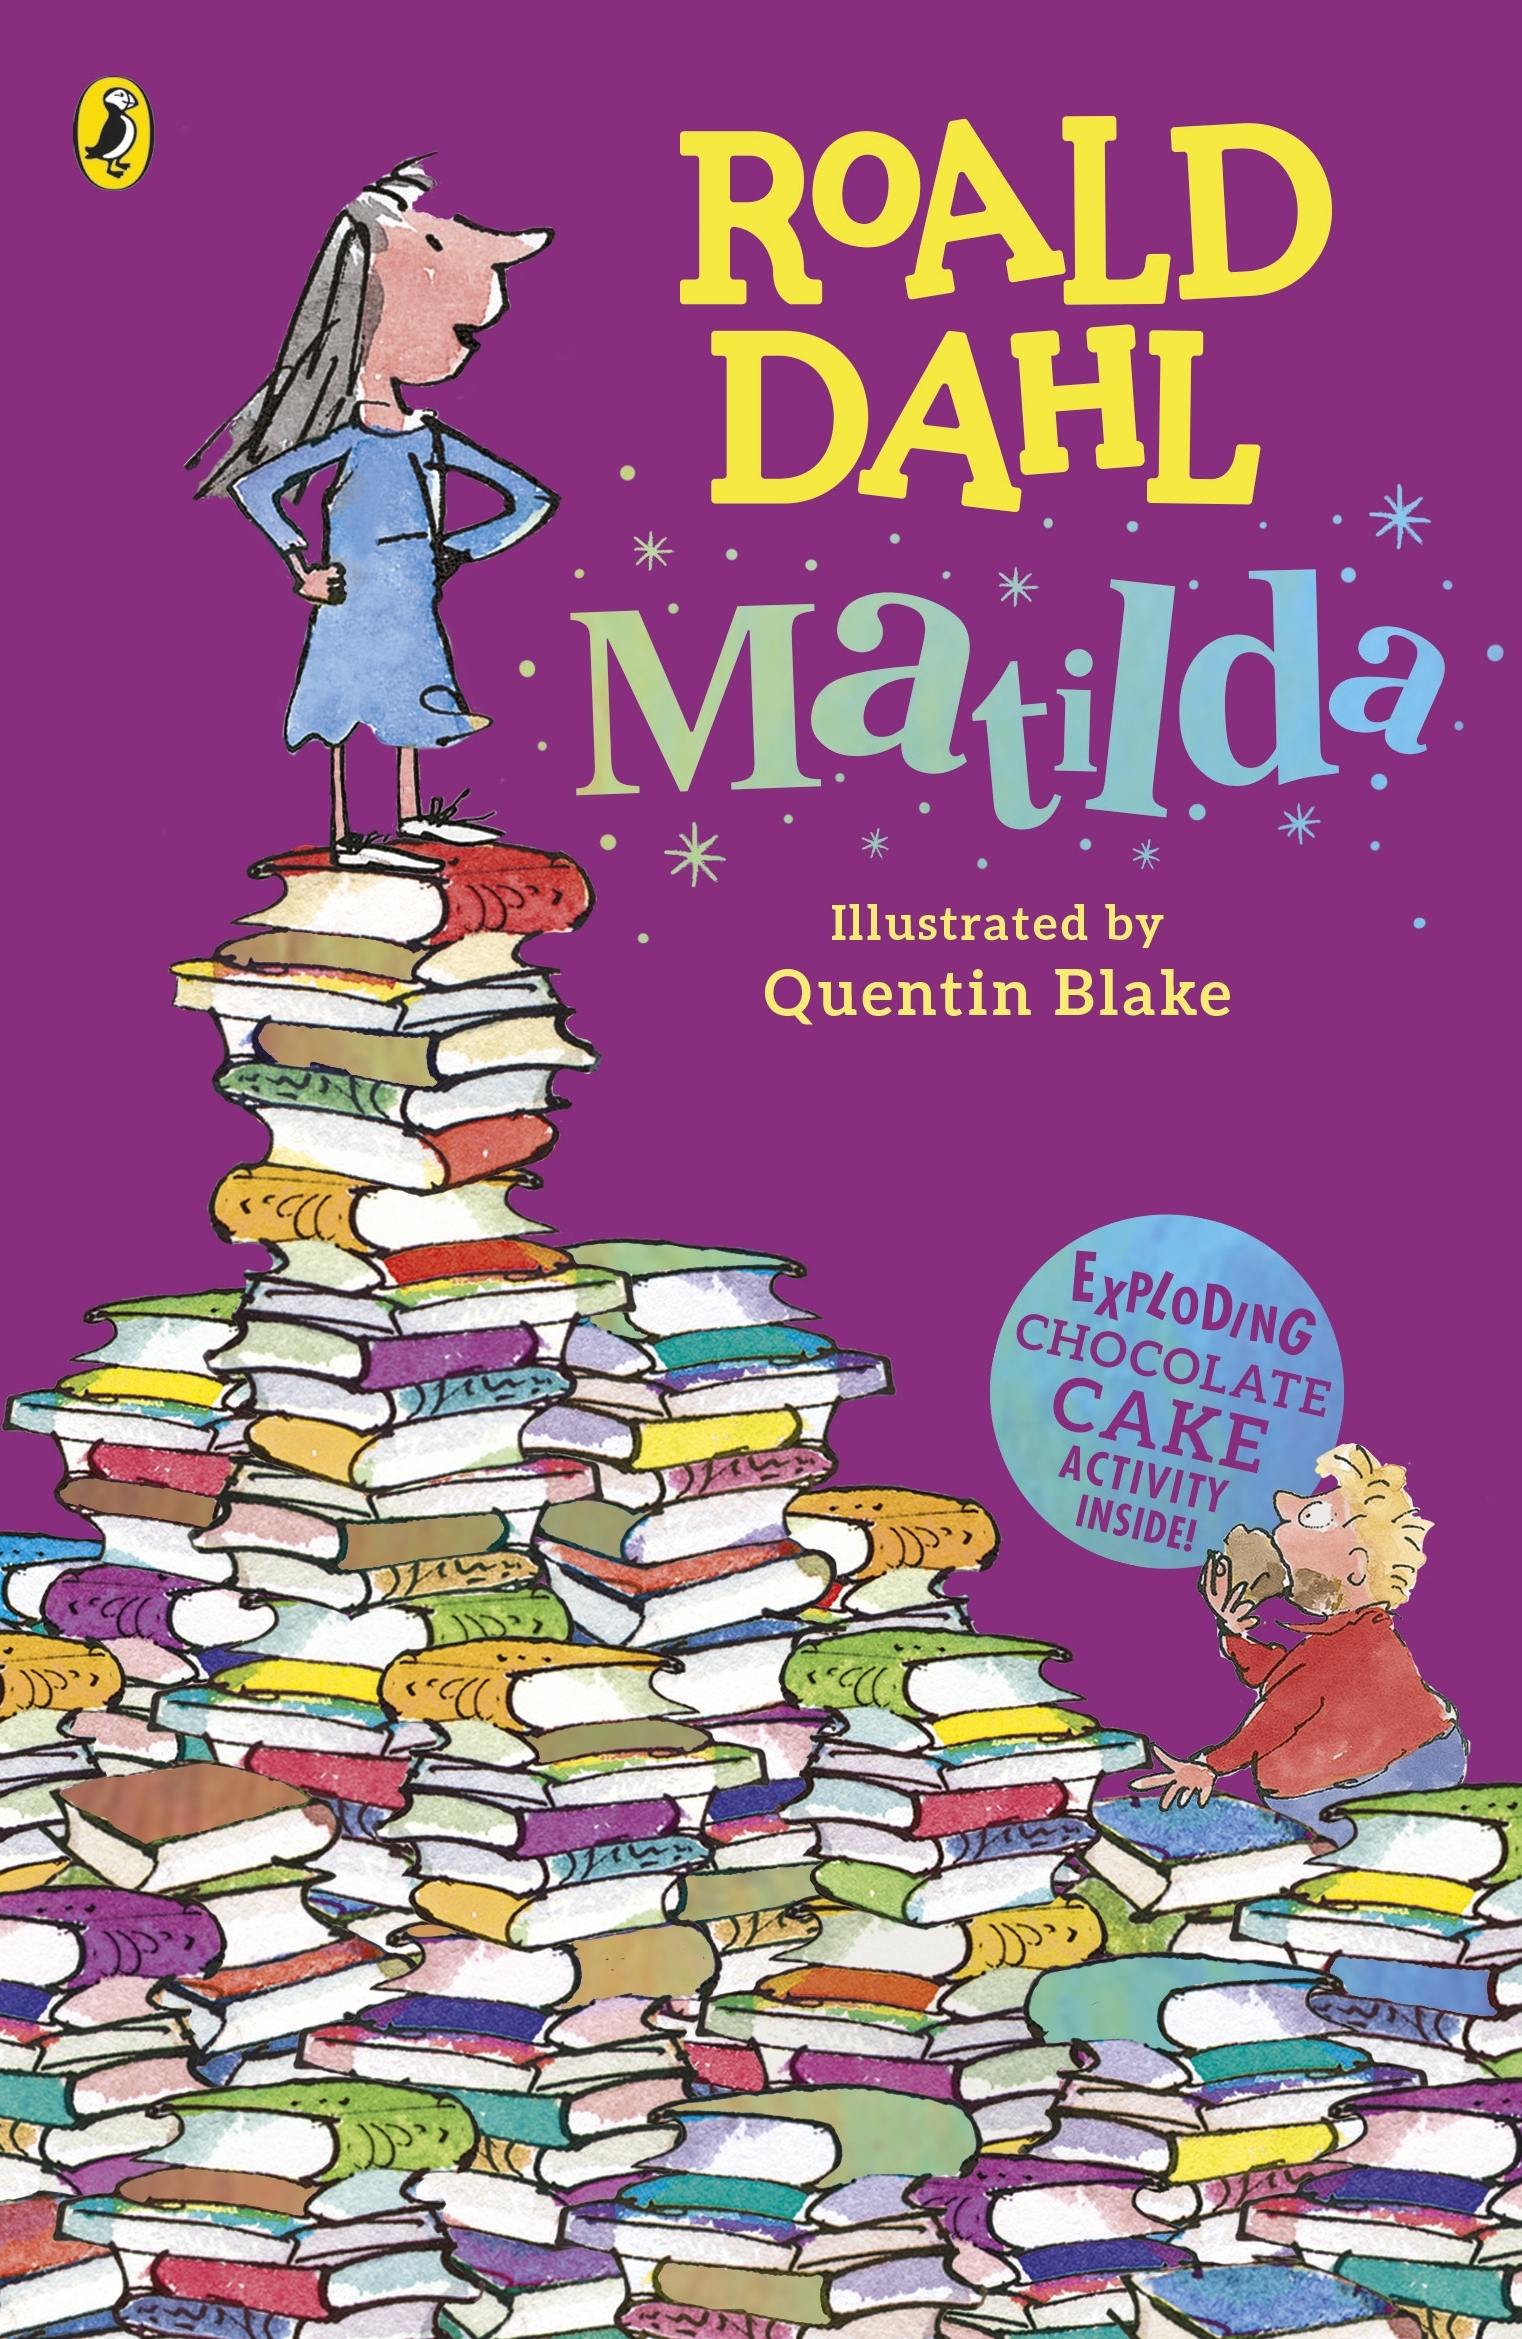 Matilda by Roald Dahl - Penguin Books Australia